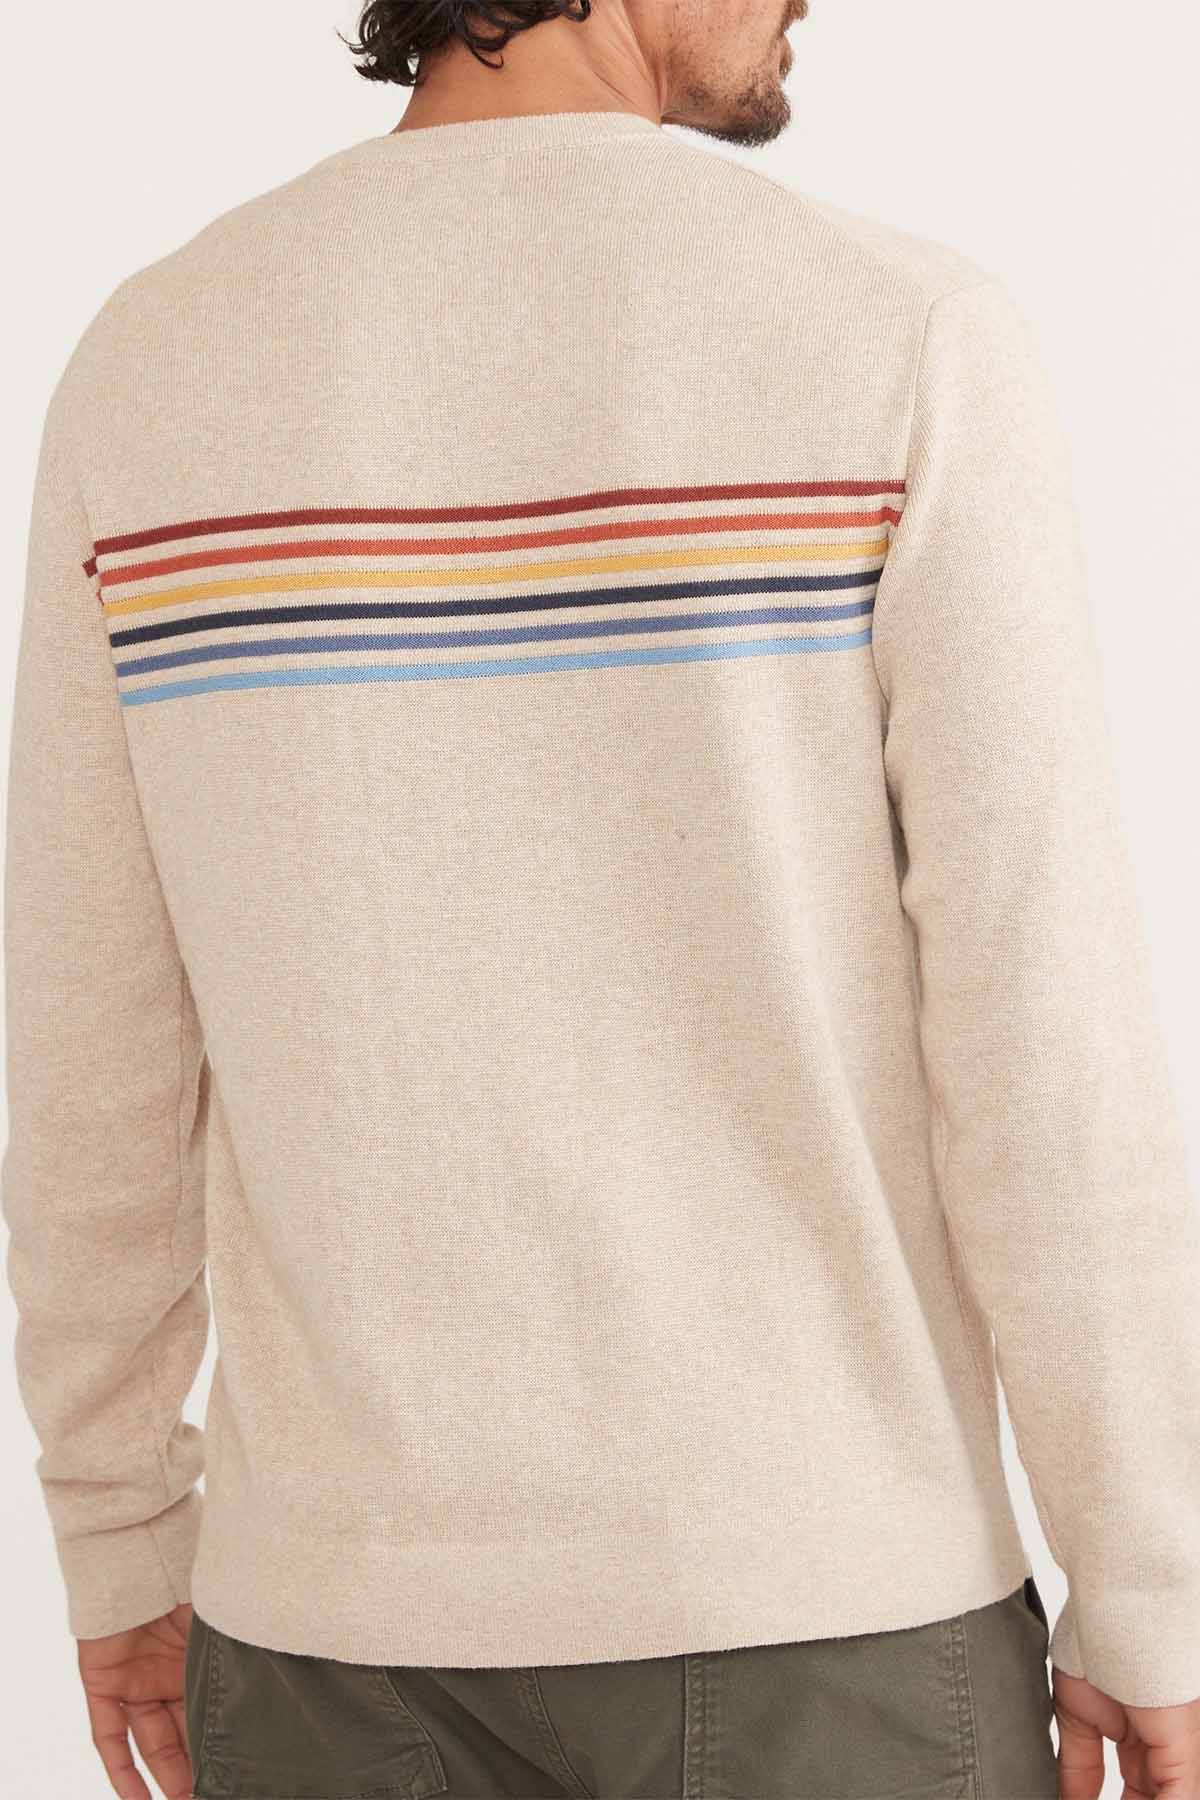 Marine Layer - Thompson Stripe Sweater - Oatmeal - Back